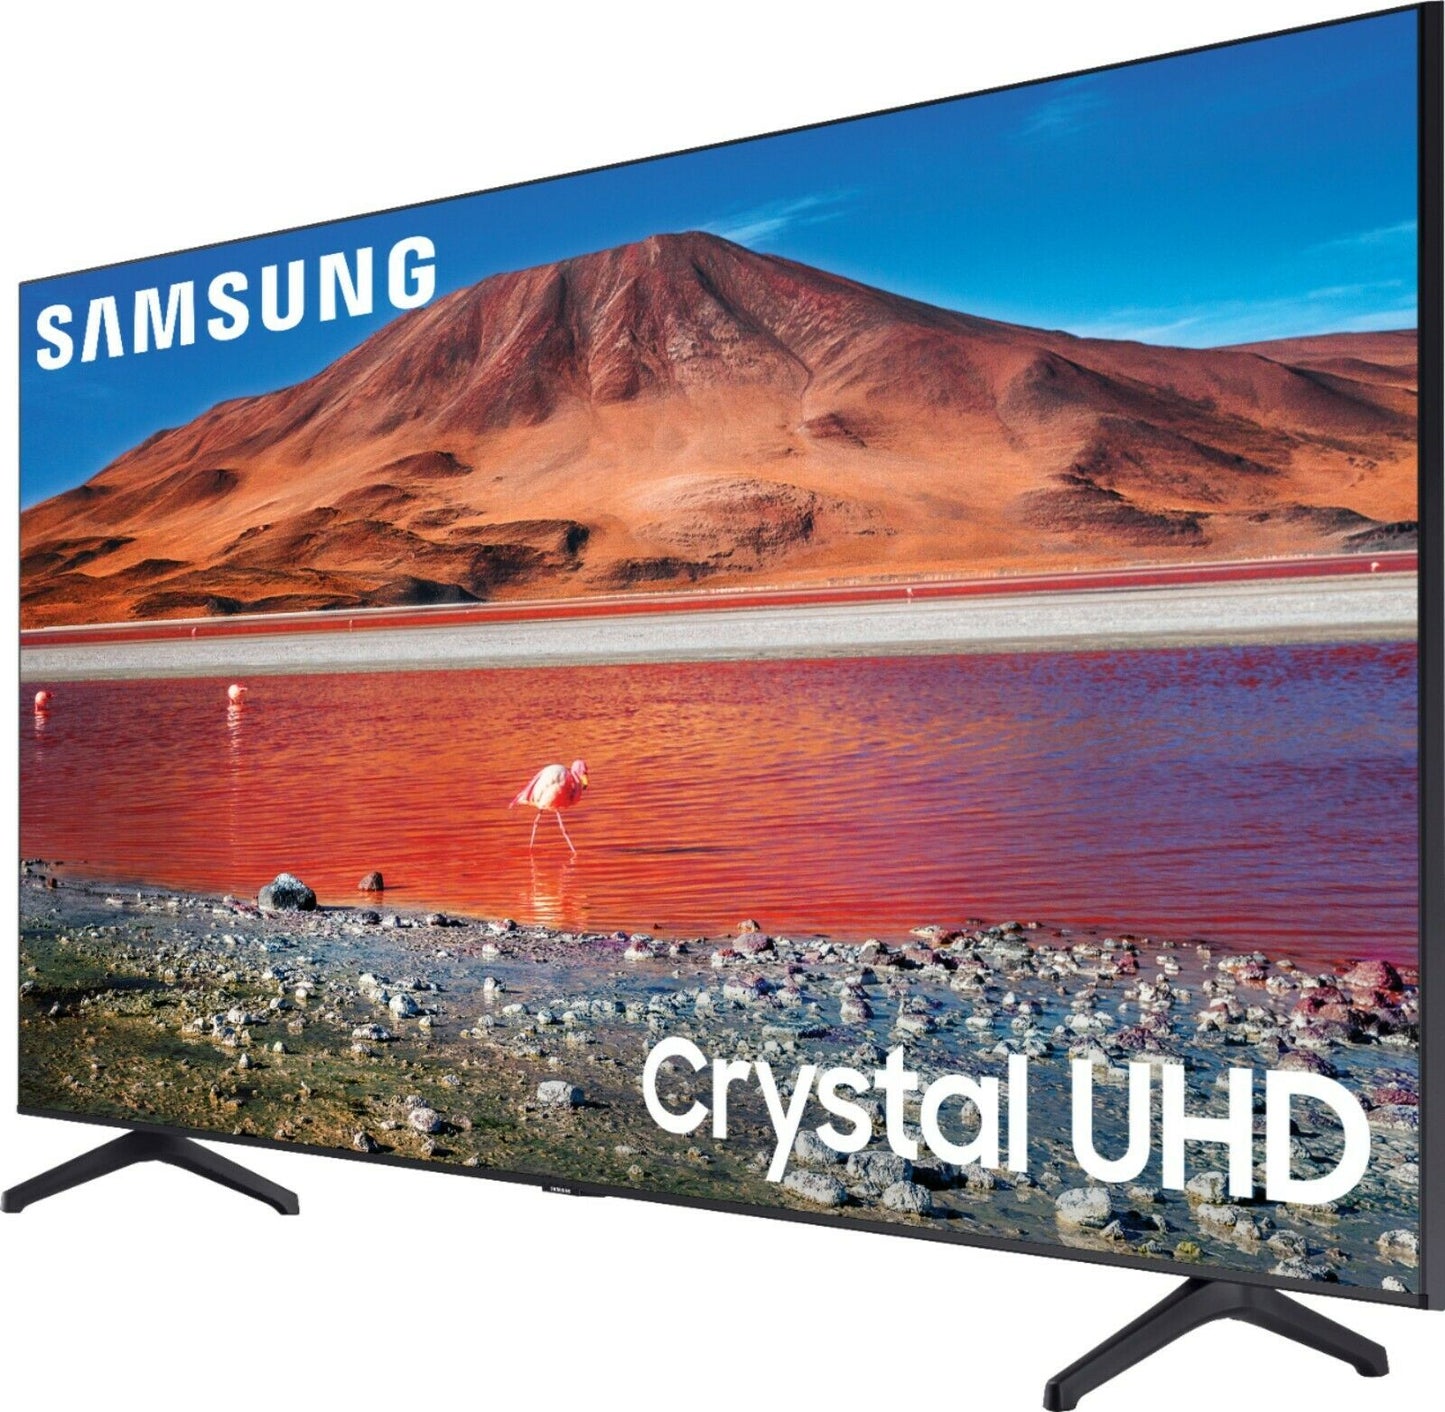 Samsung Crystal UHD 6 Series 70"TV